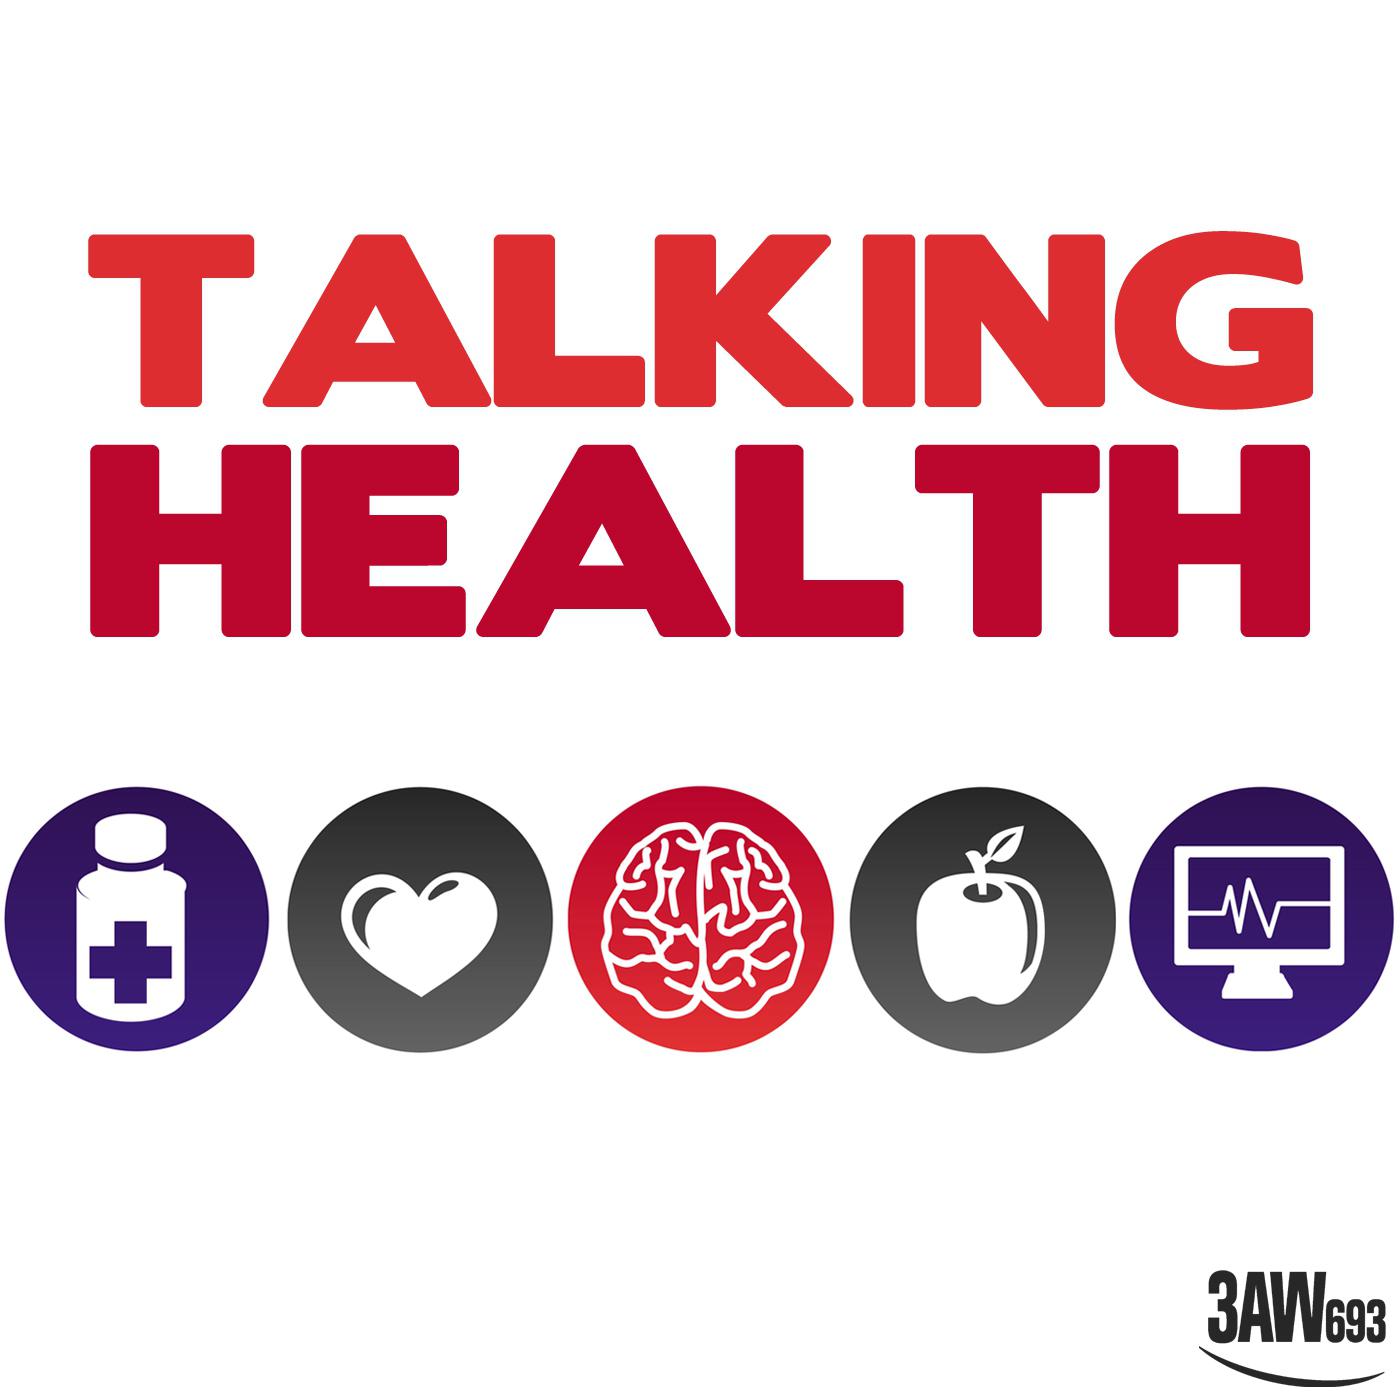 Talking Health, August 31